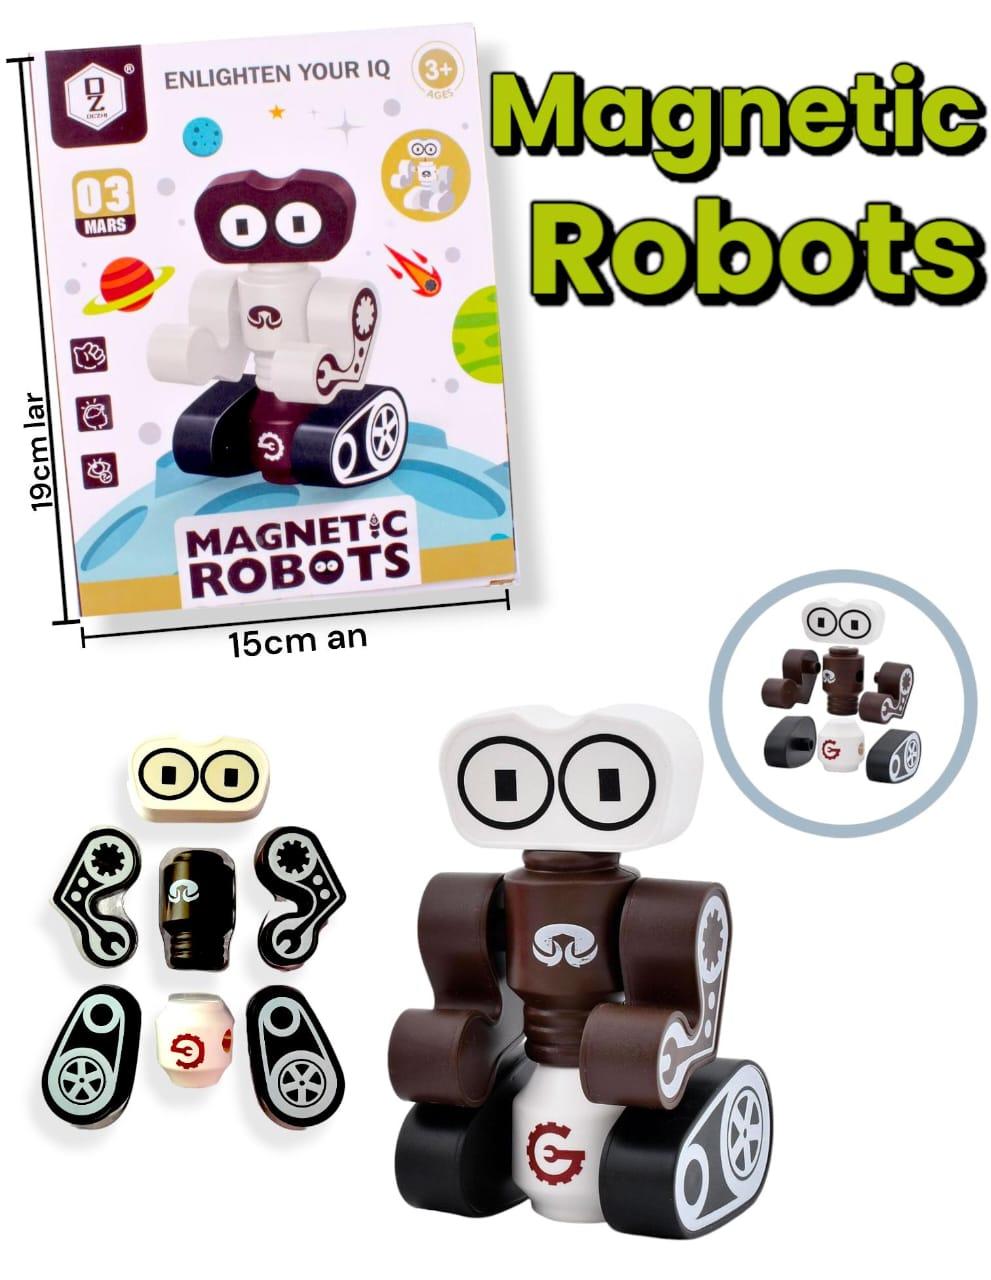 Robot educacional Magnetico MAGNETIC ROBOTS